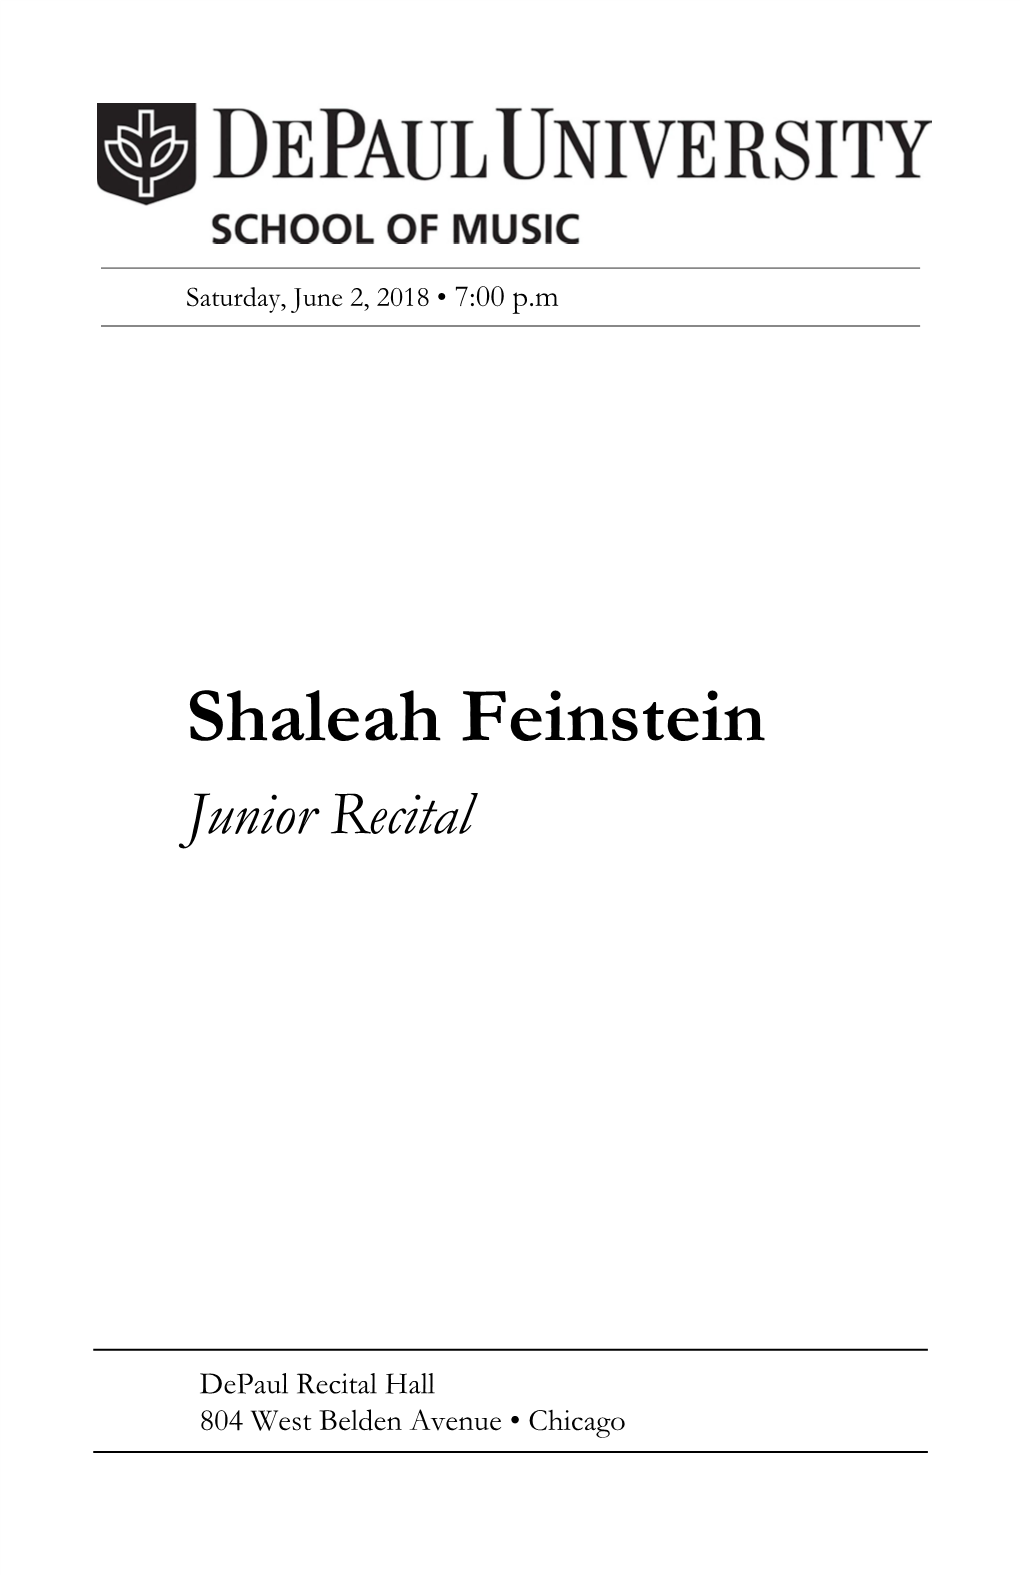 Shaleah Feinstein, Violin Junior Recital Beilin Han, Piano